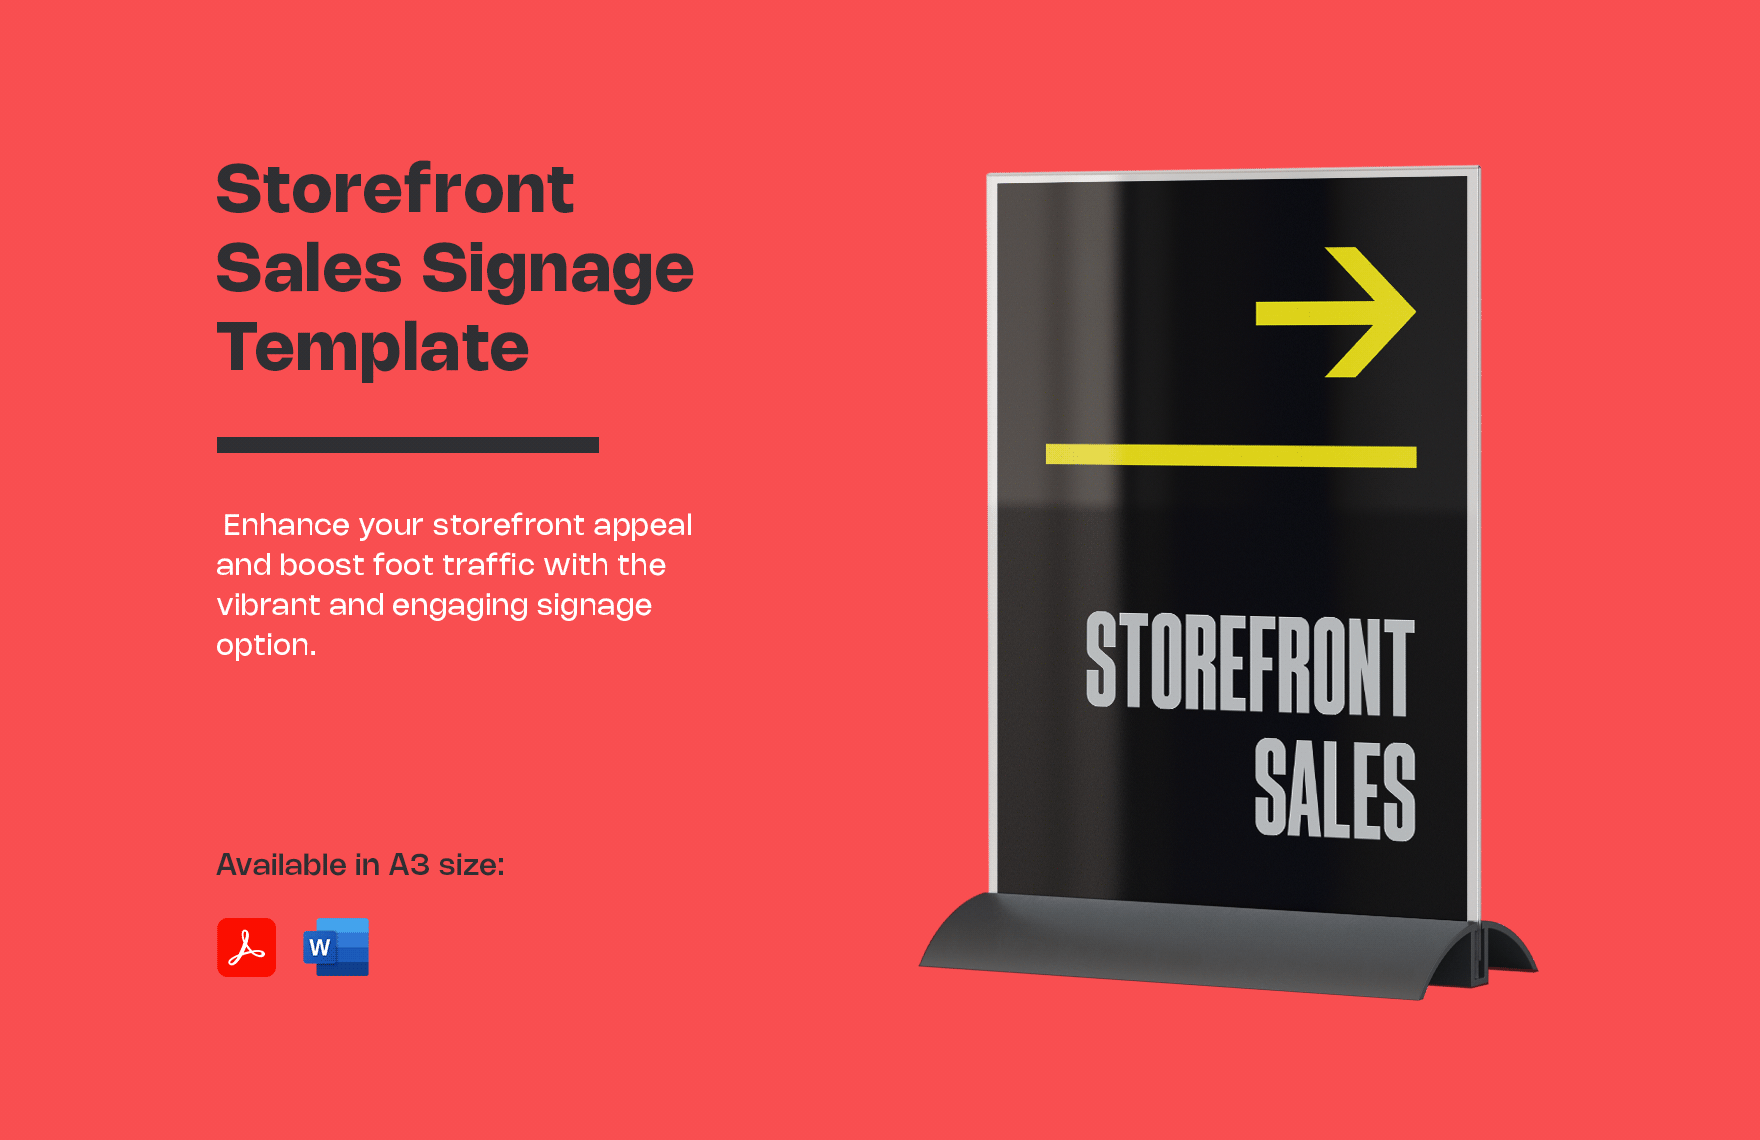 Storefront Sales Signage Template